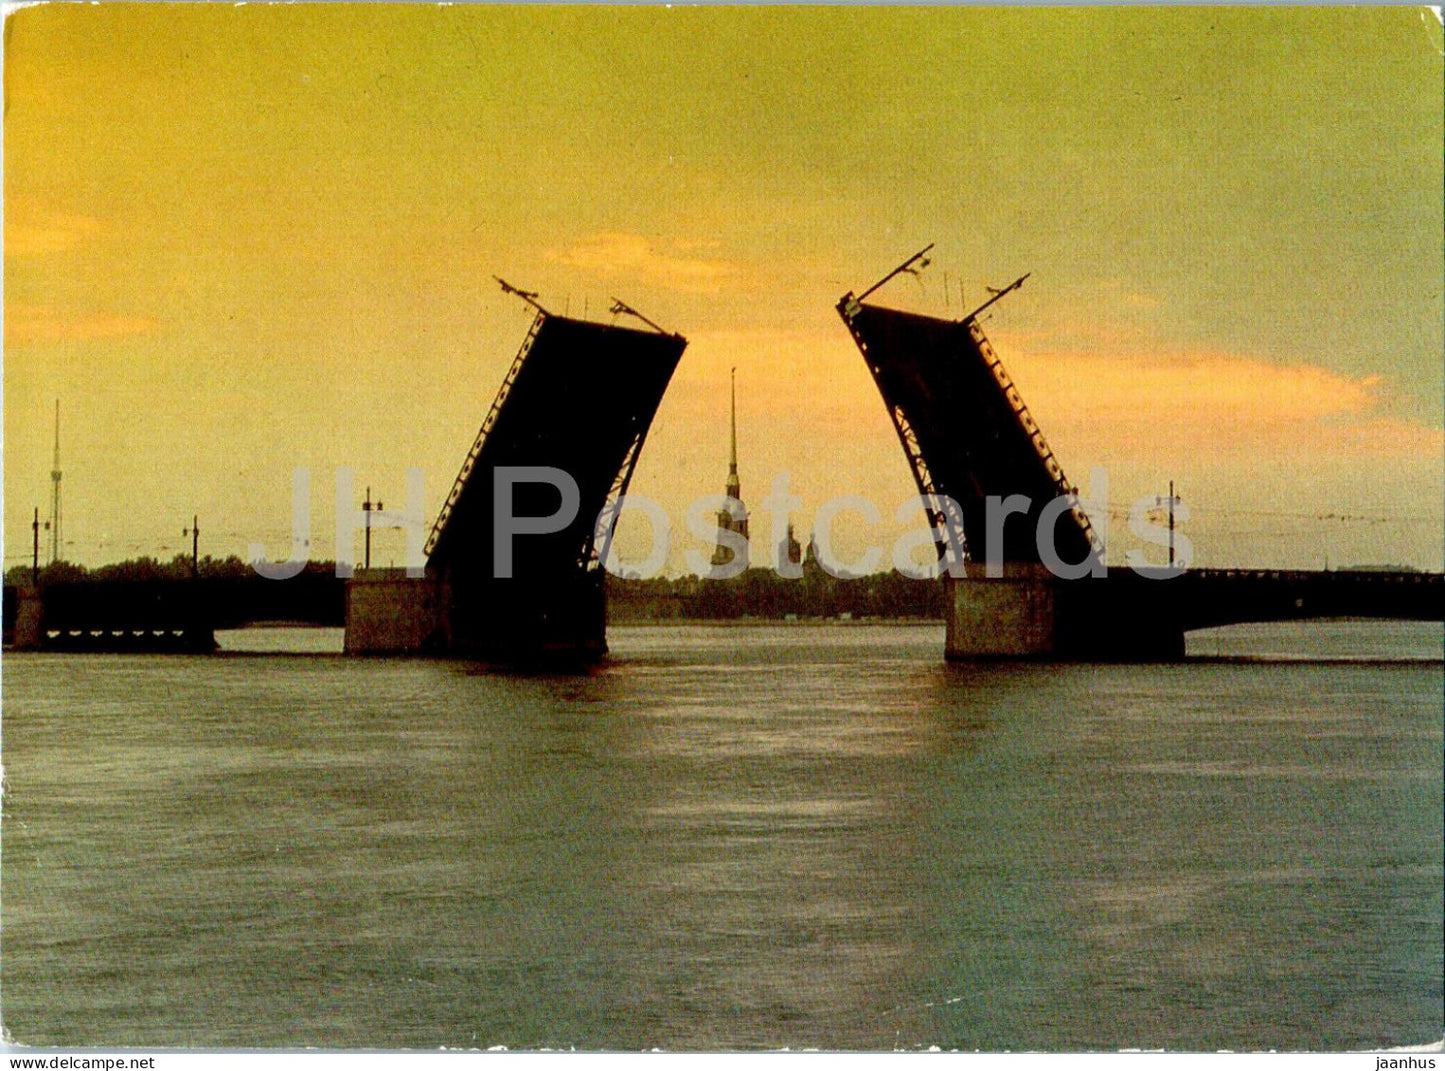 Leningrad - St Petersburg - The Neva river during a White Night - bridge - Aeroflot - Russia USSR - unused - JH Postcards